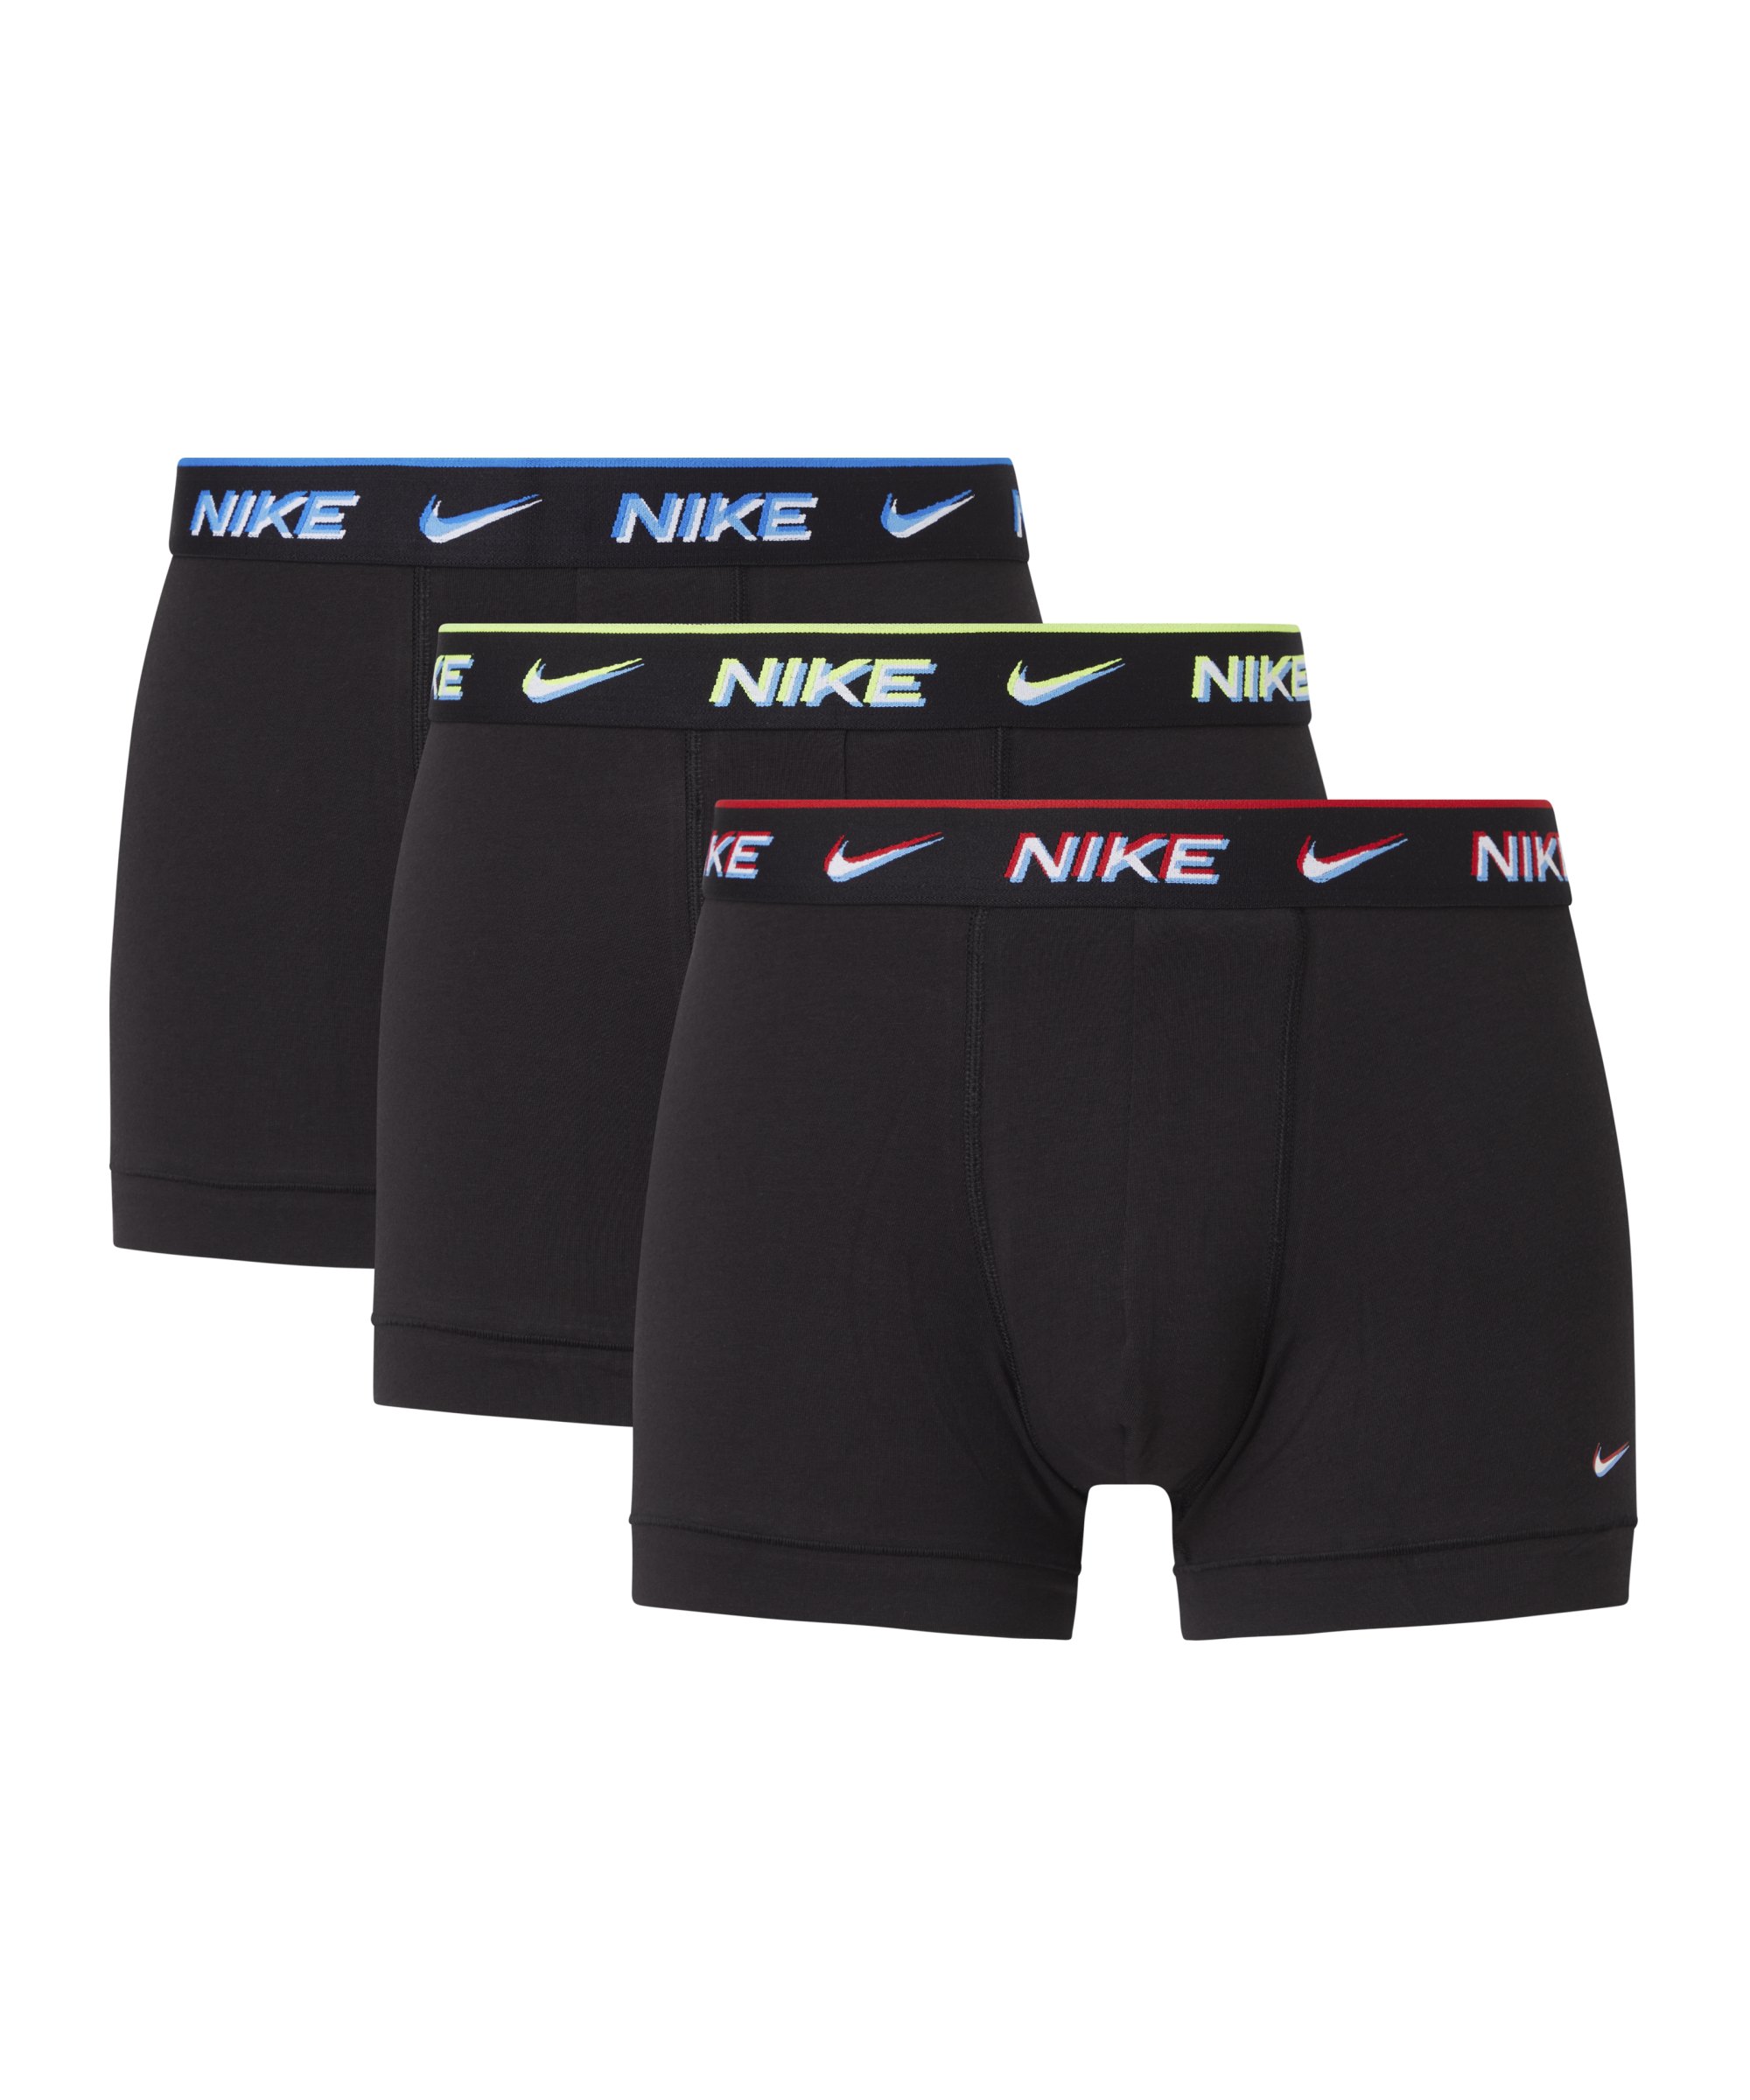 Nike Cotton Trunk Boxershort 3er Pack Schwarz FBAV - schwarz